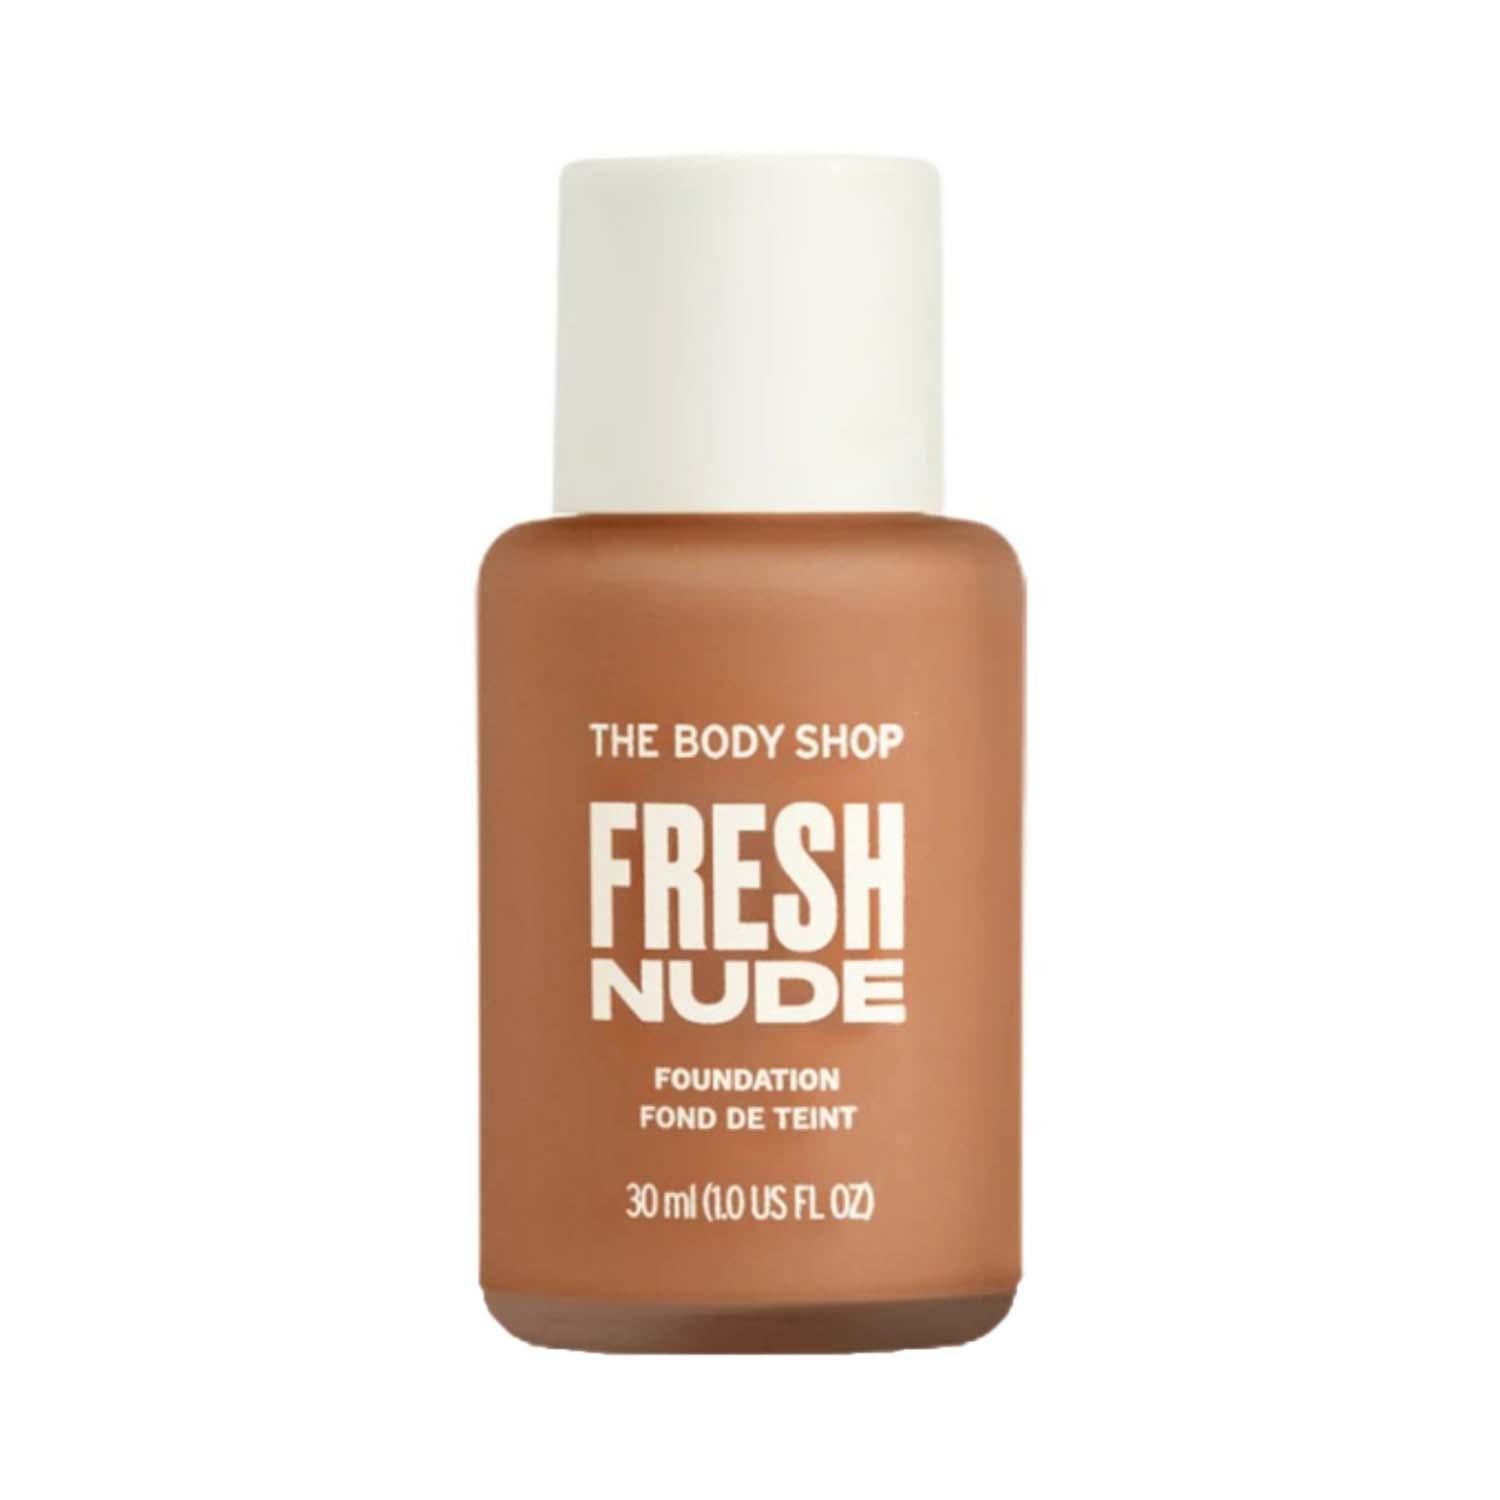 The Body Shop | The Body Shop Fresh Nude Foundation - 1C Deep (30 ml)